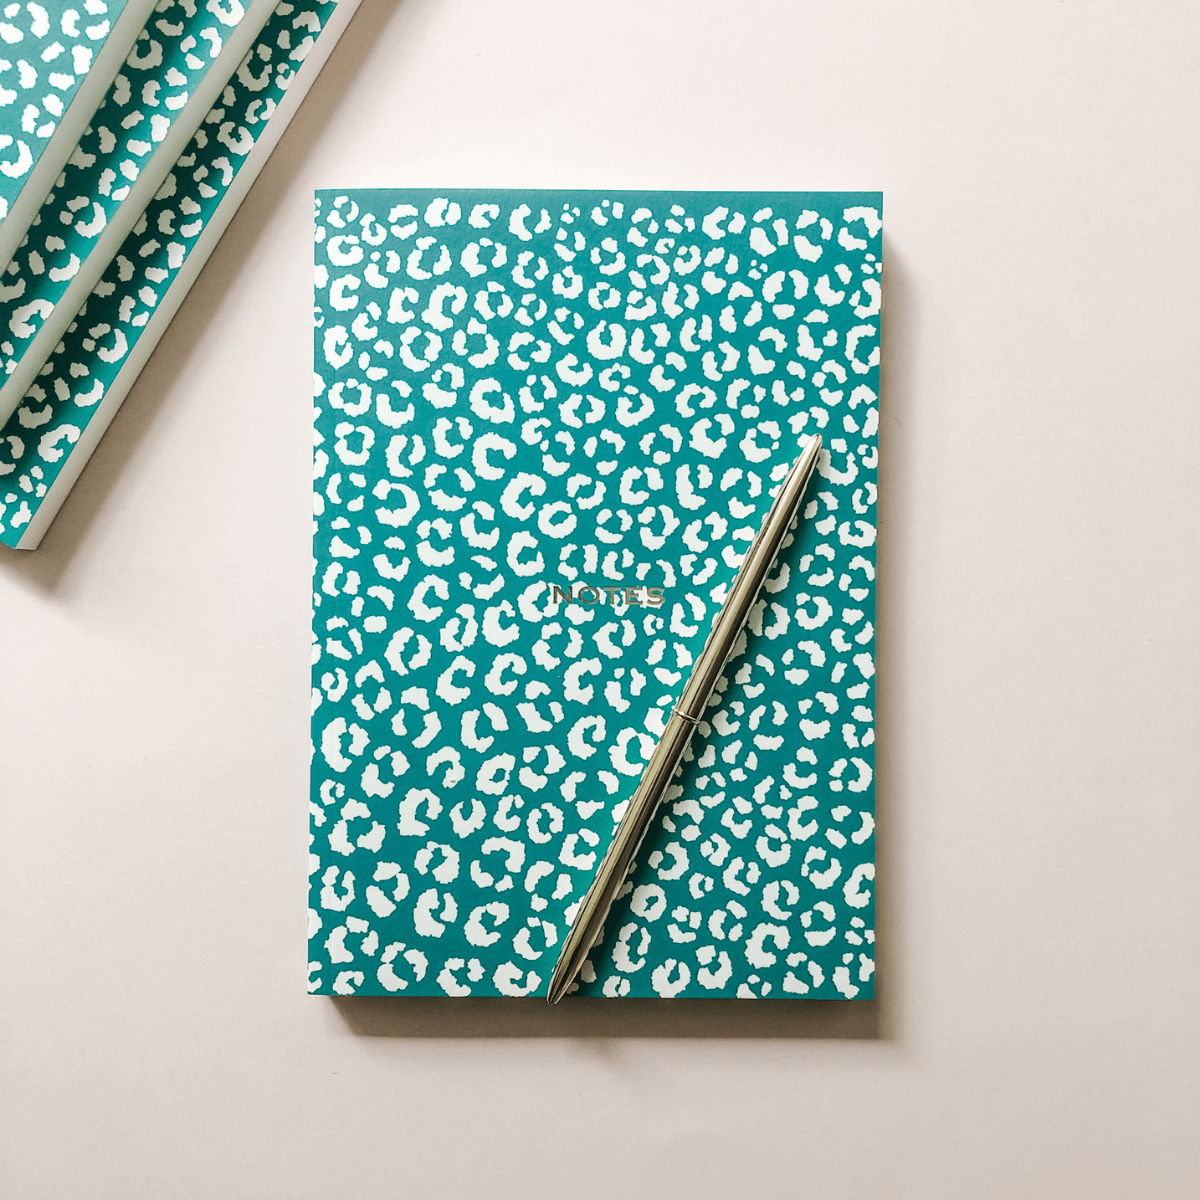 Leopard Print A5 Notebook - The Design Palette